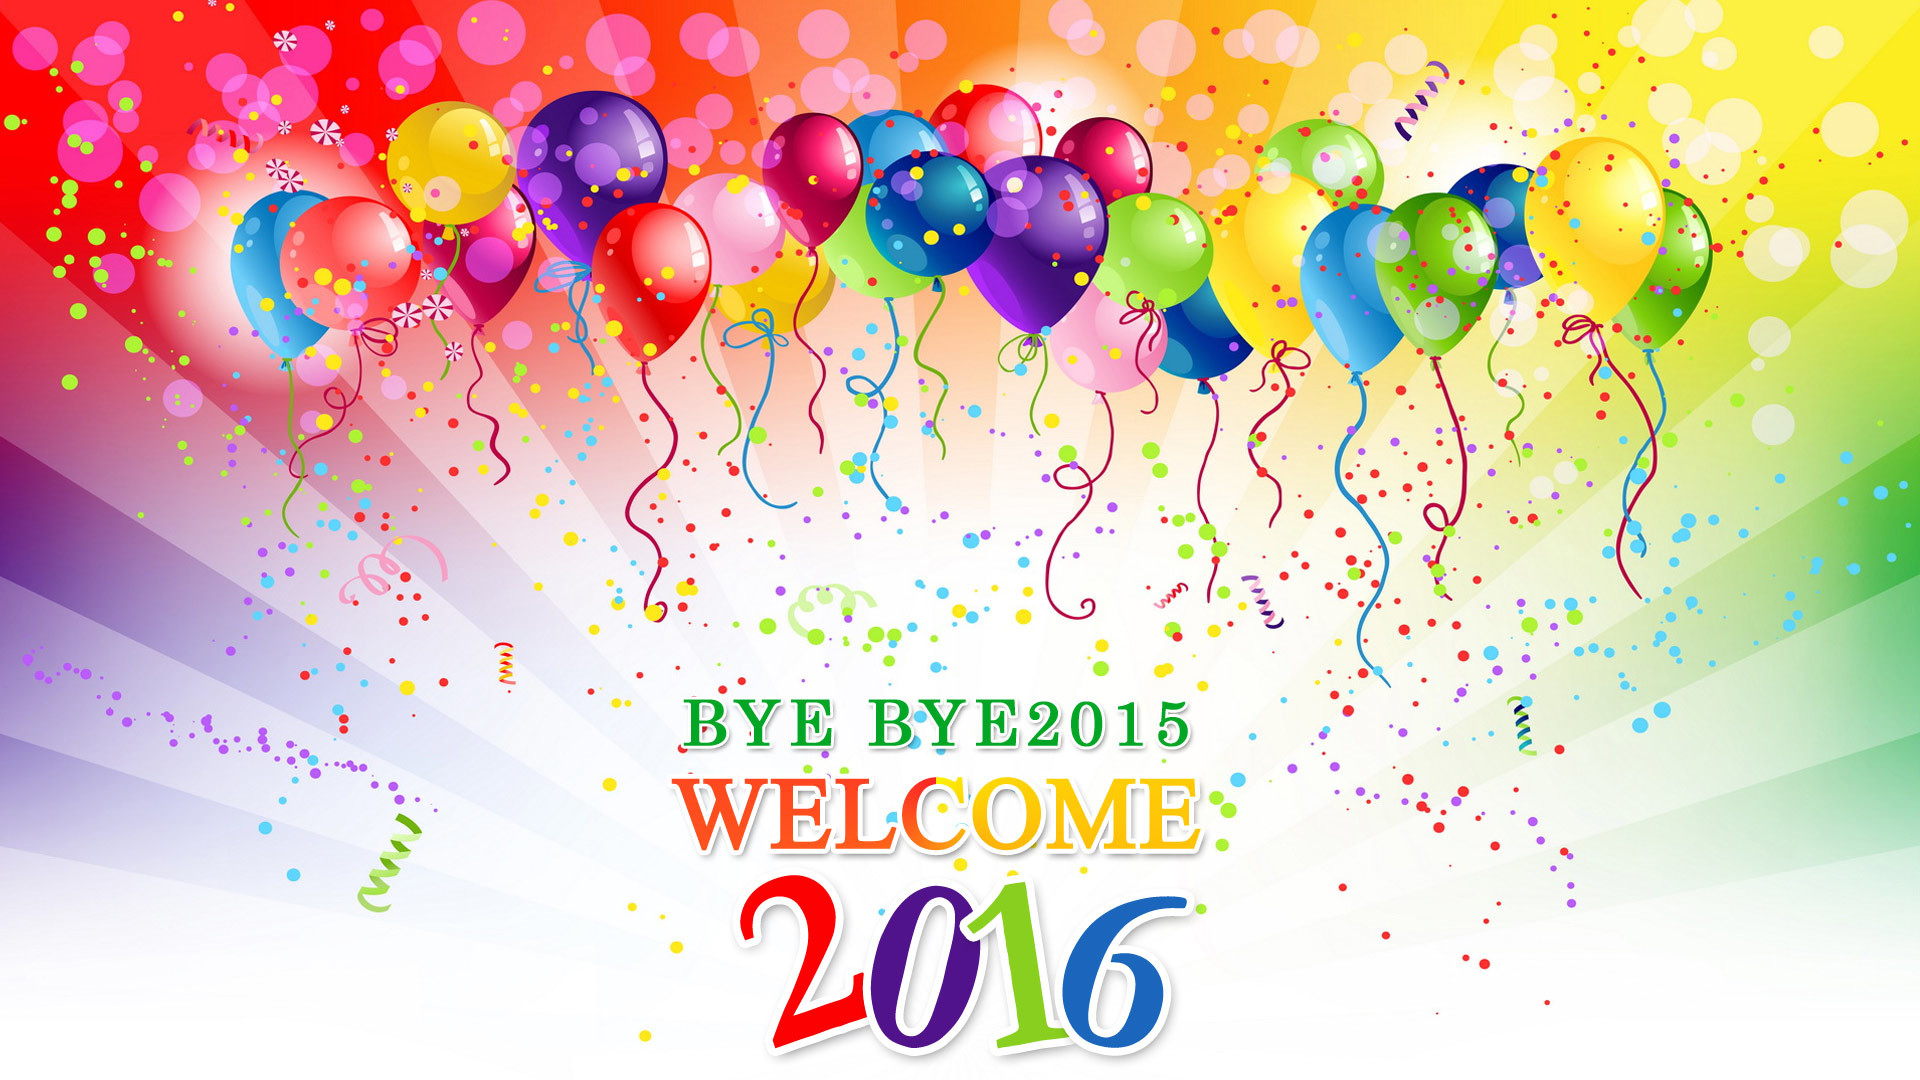 Bye Bye 2015 Welcome 2016 Hd Wallpapers 
 Data Src - Grand Opening Balloon Background - HD Wallpaper 